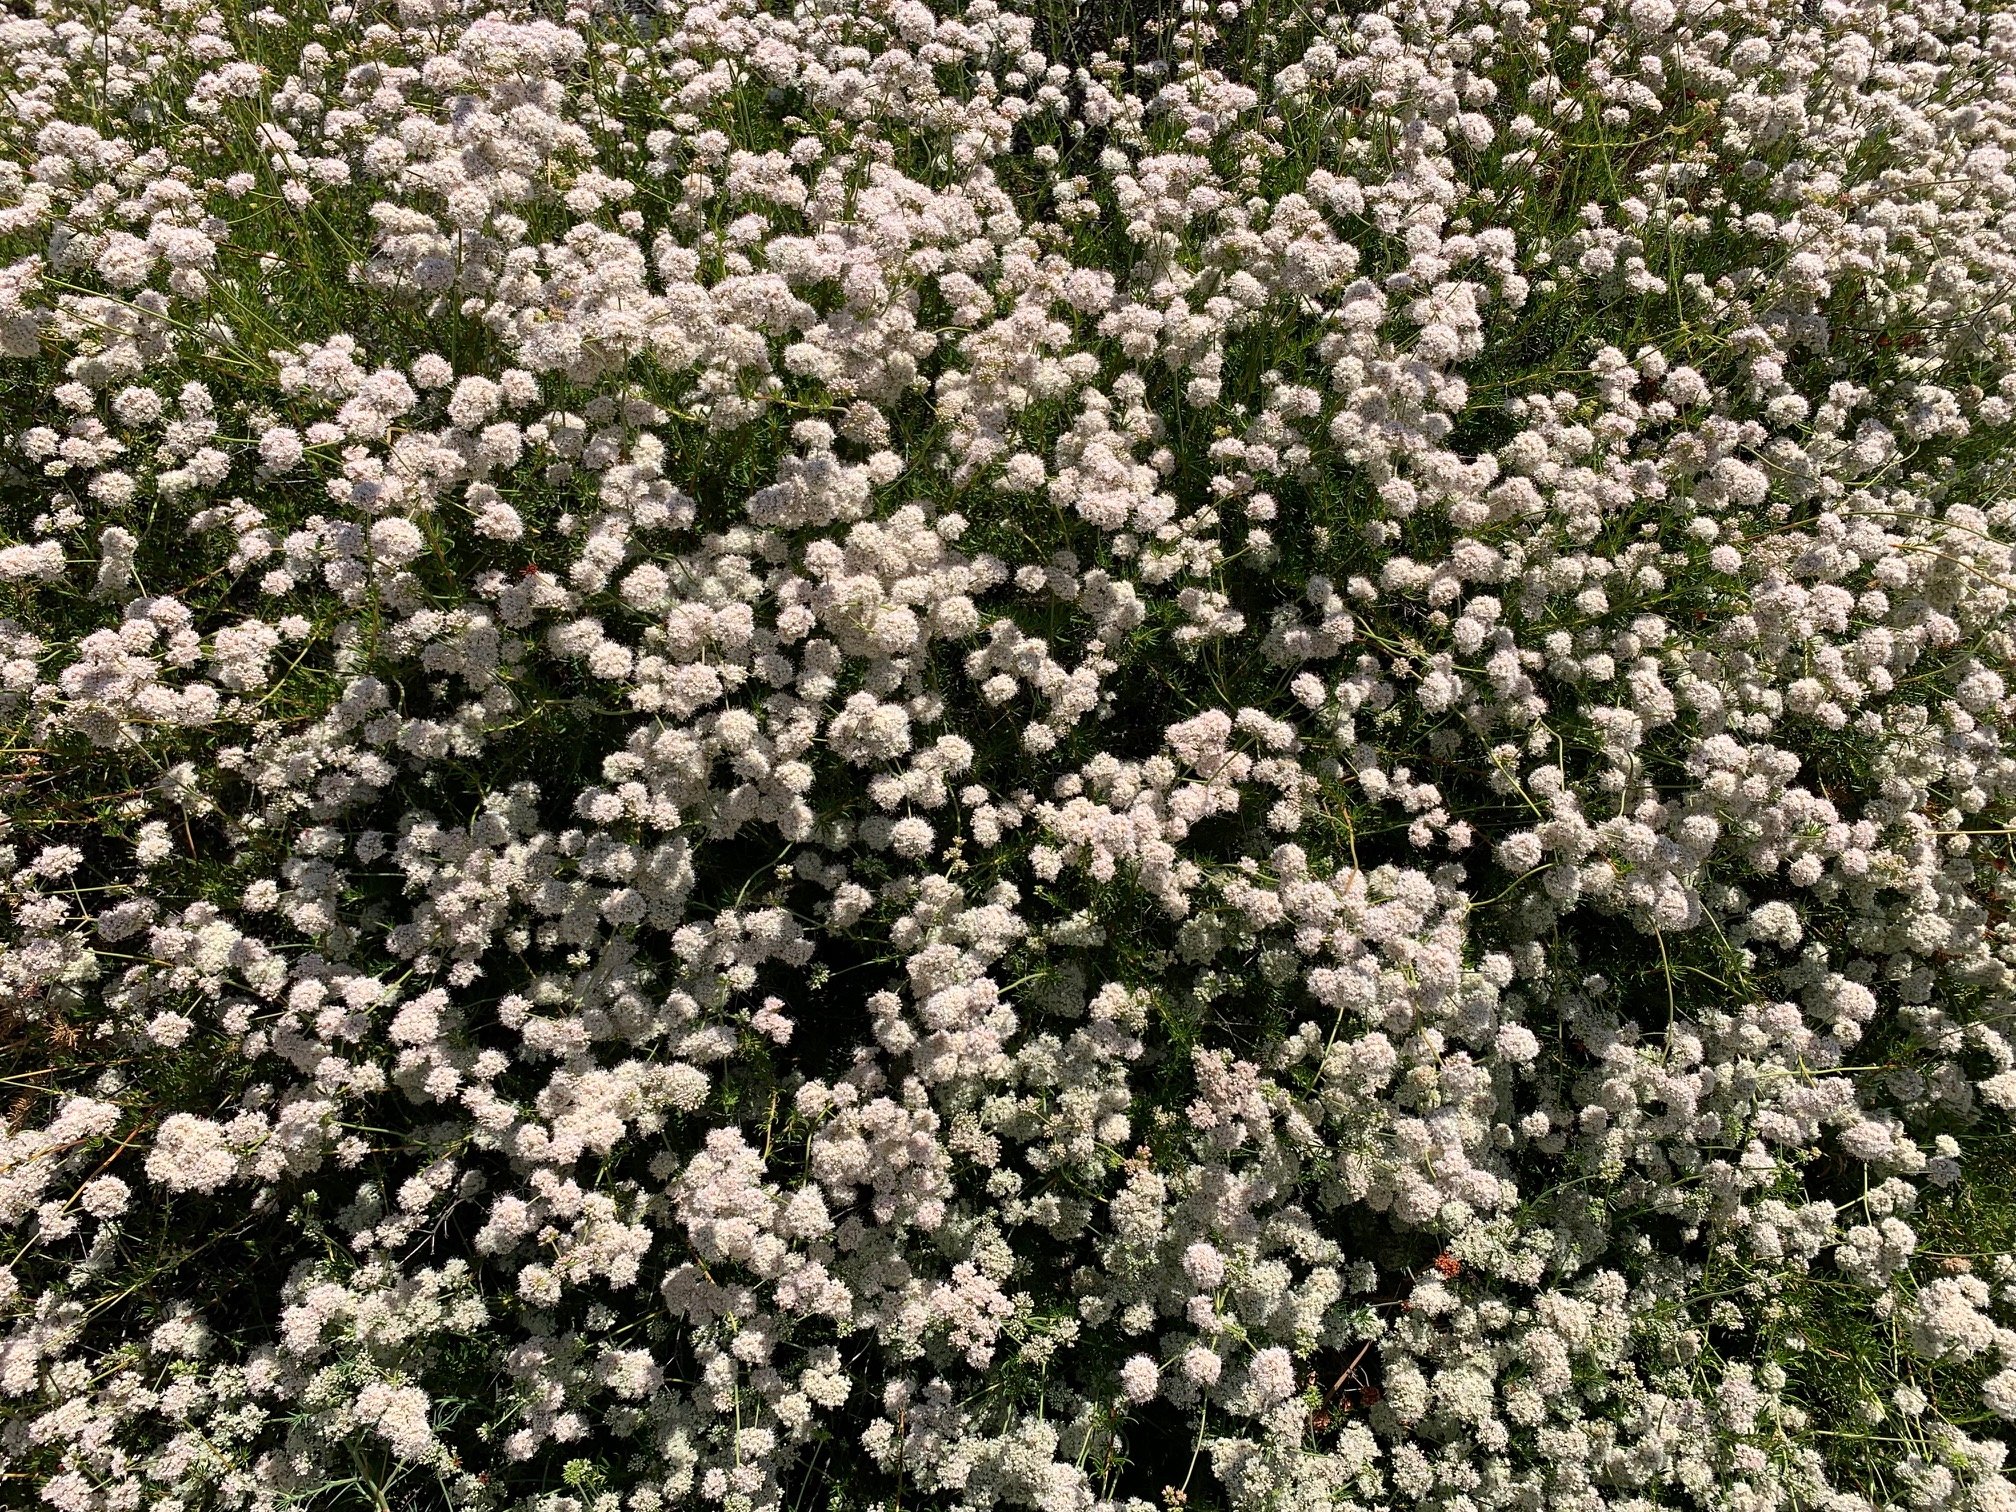 California Buckwheat in flower